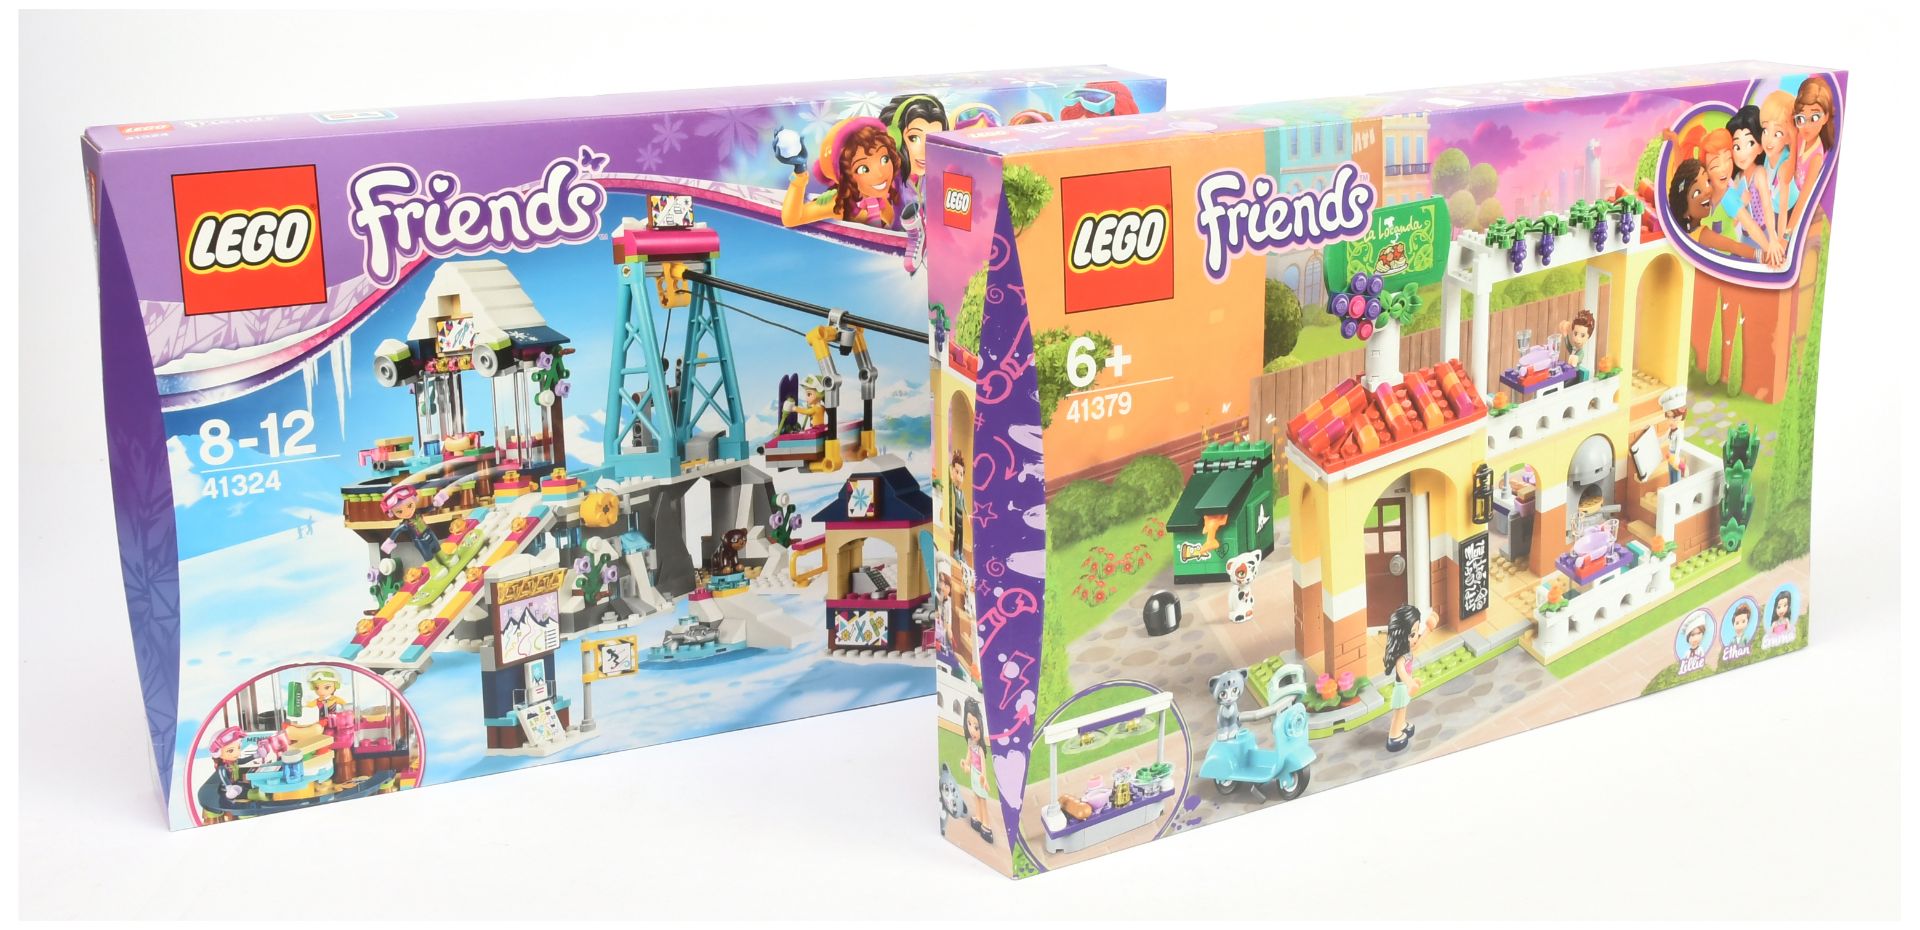 Lego Friends sets x2 Includes Snow Resort Ski Lift 41324, Heartlake City Restaurant 41379. Unopen...